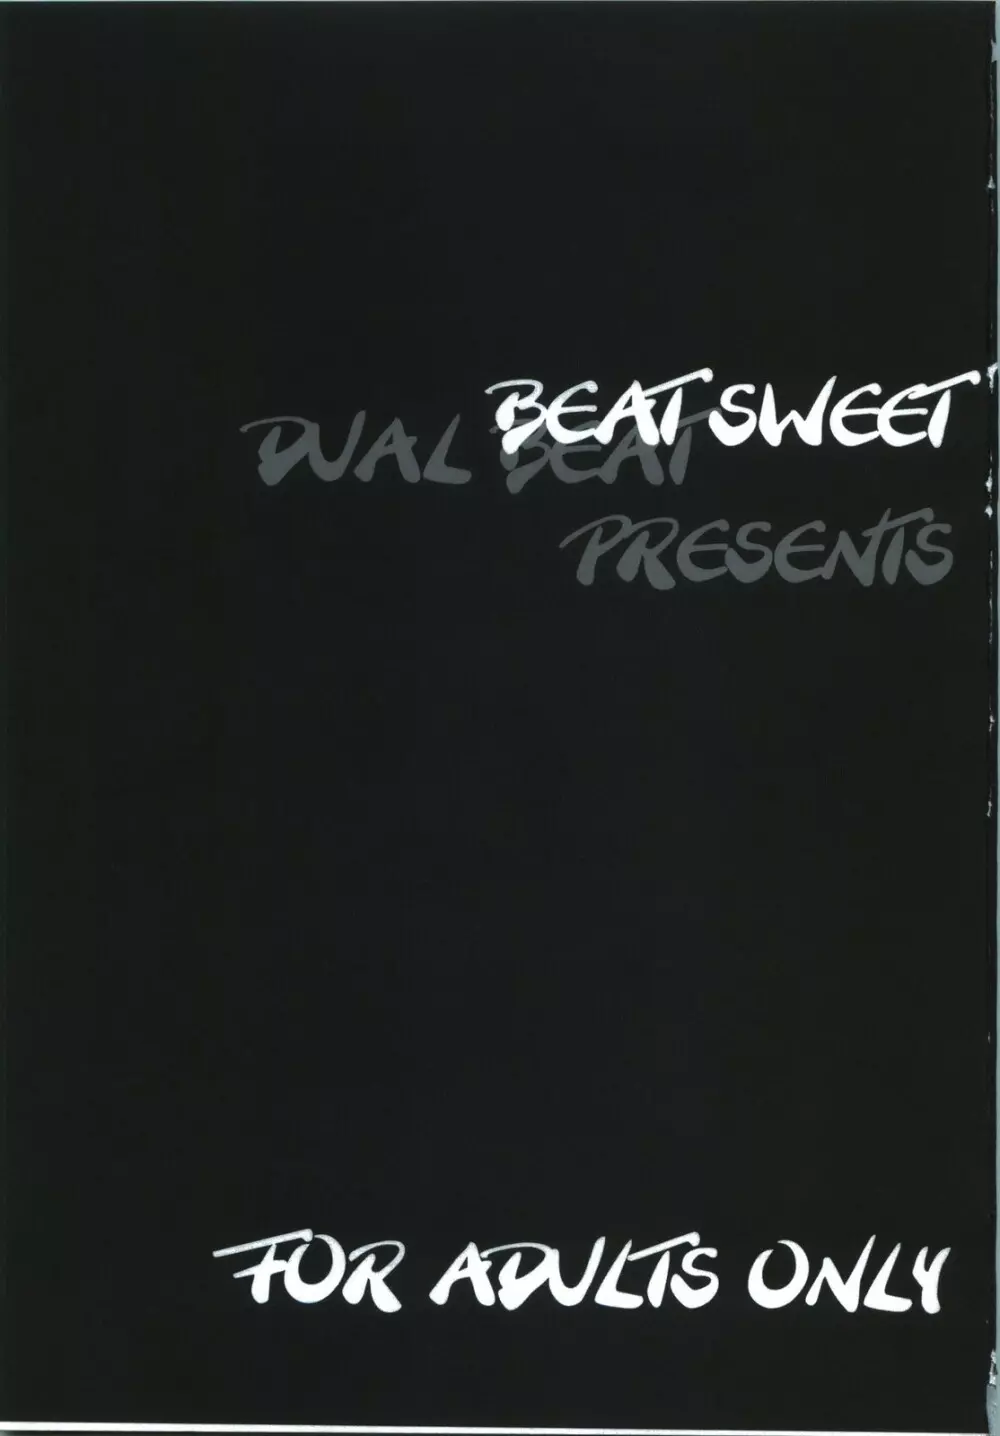 BEAT SWEET - page3